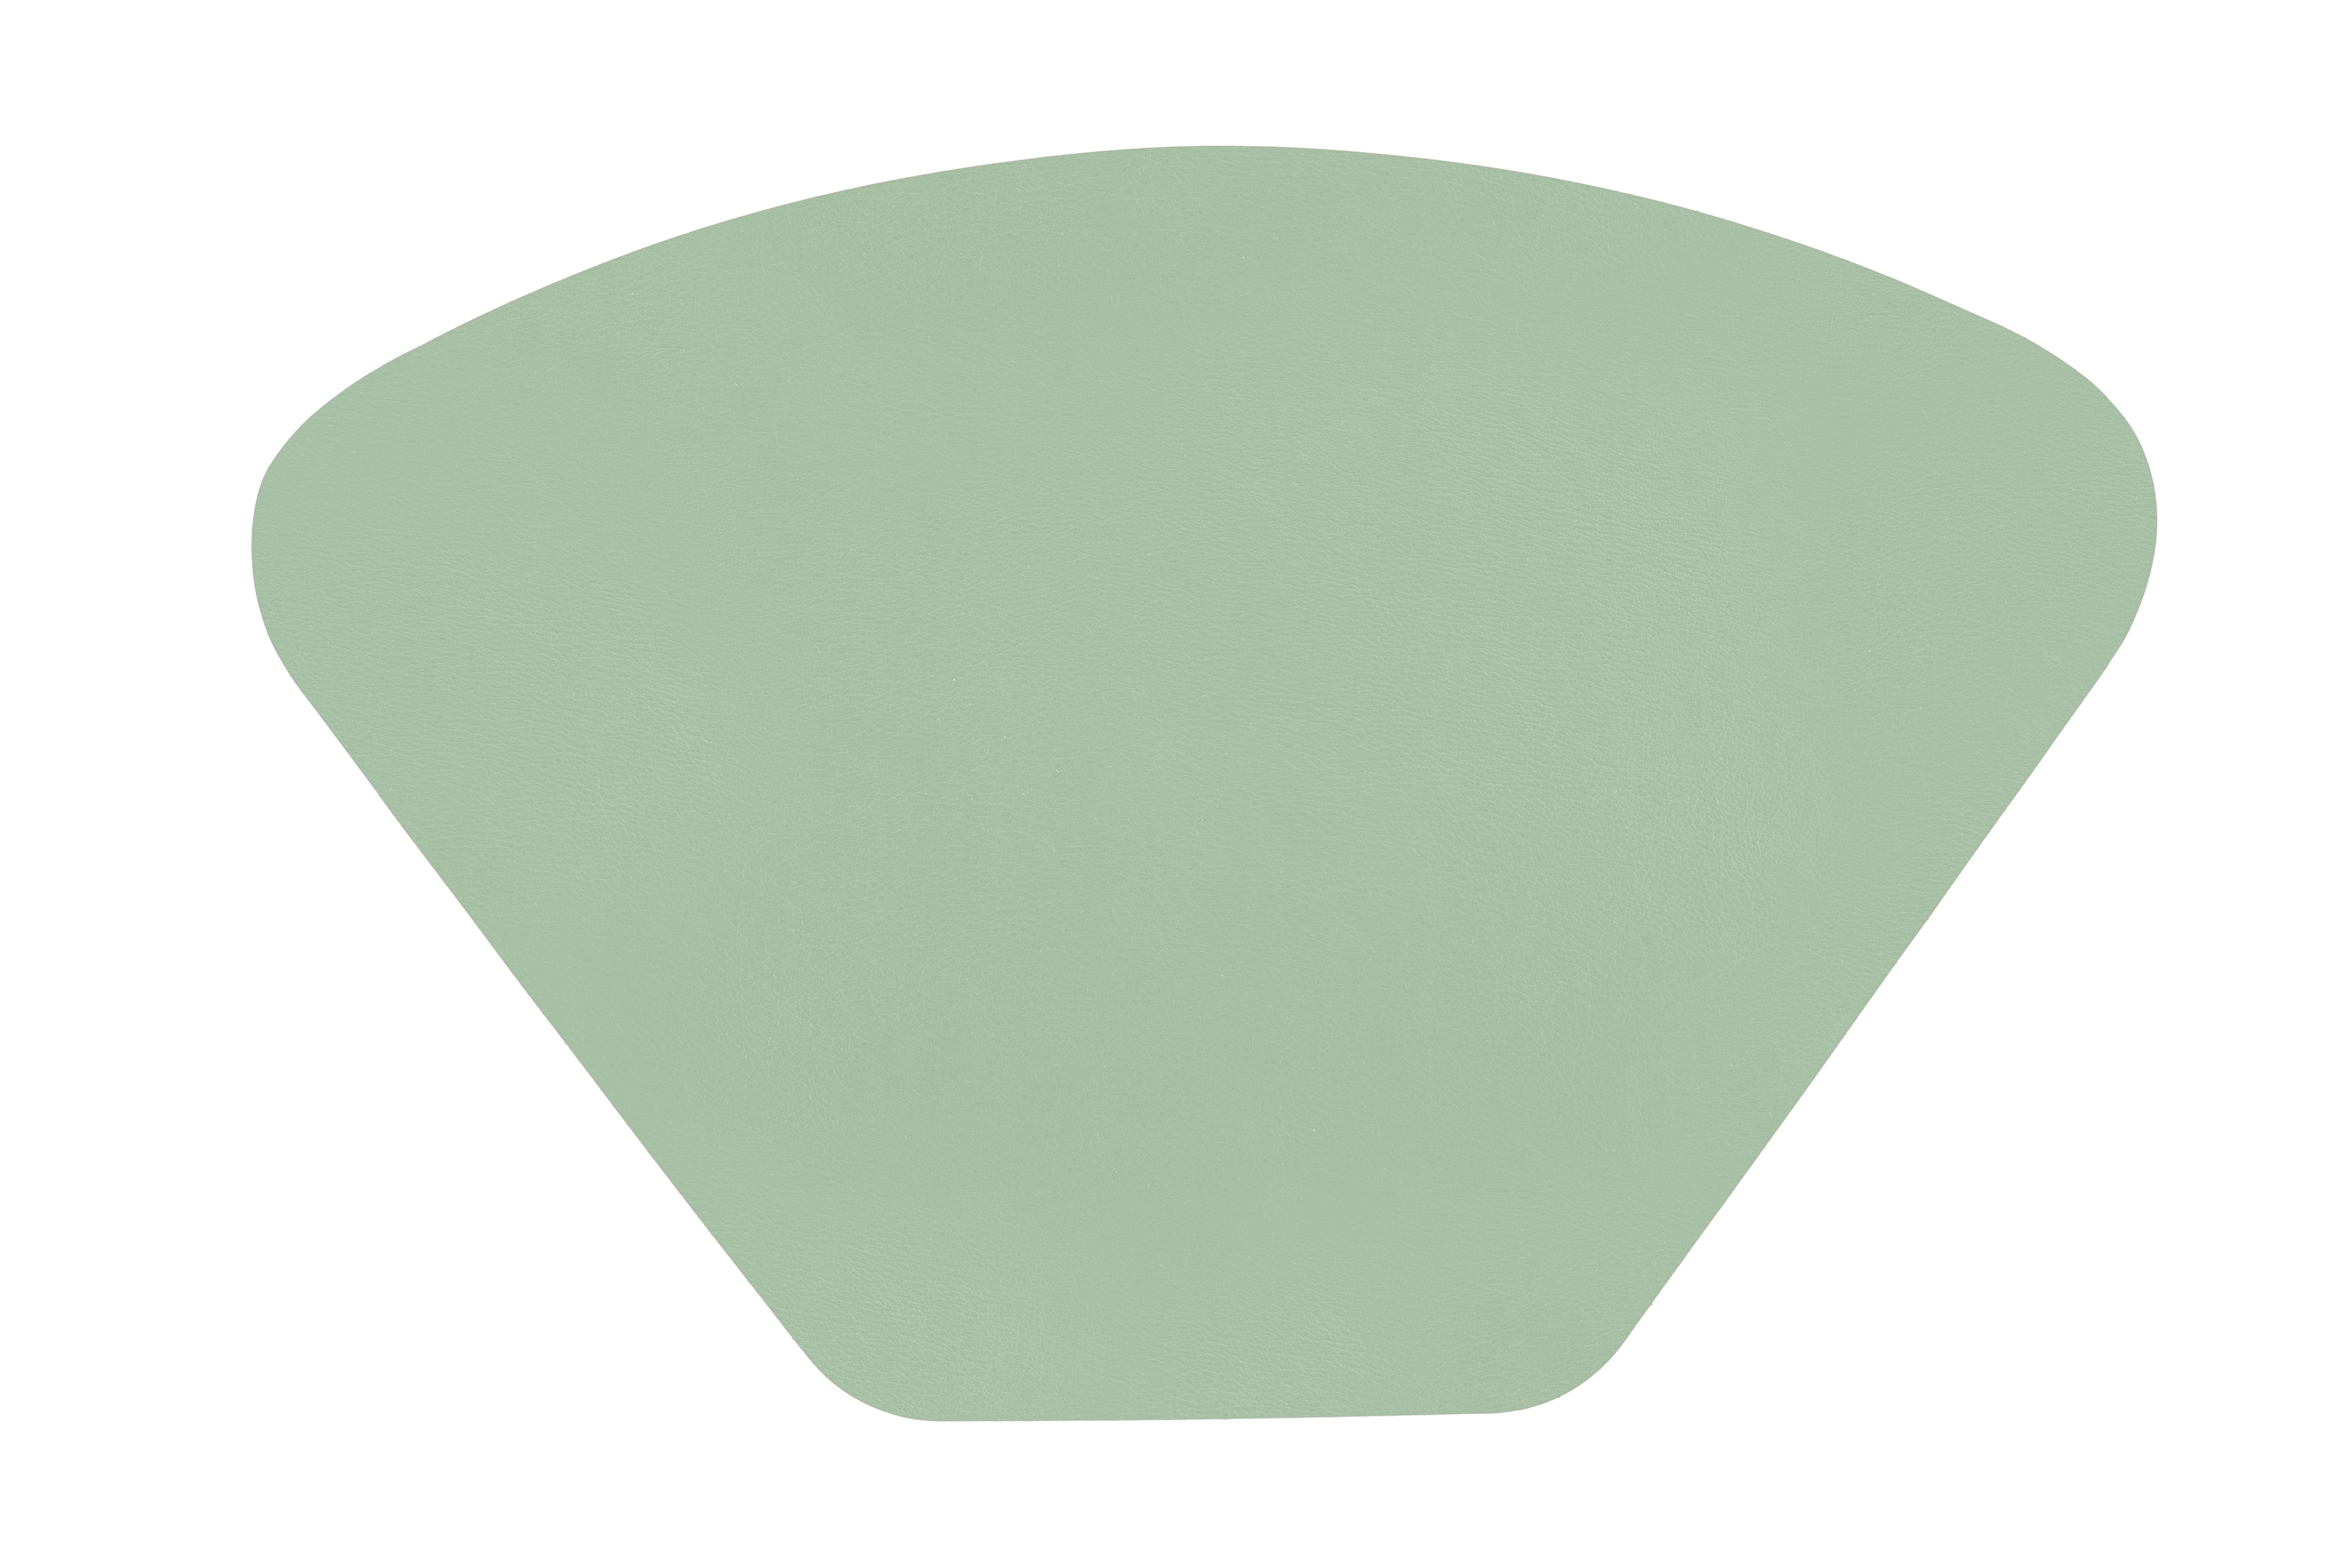 Placemat TOGO WEDGE, 32x48cm, malachite green